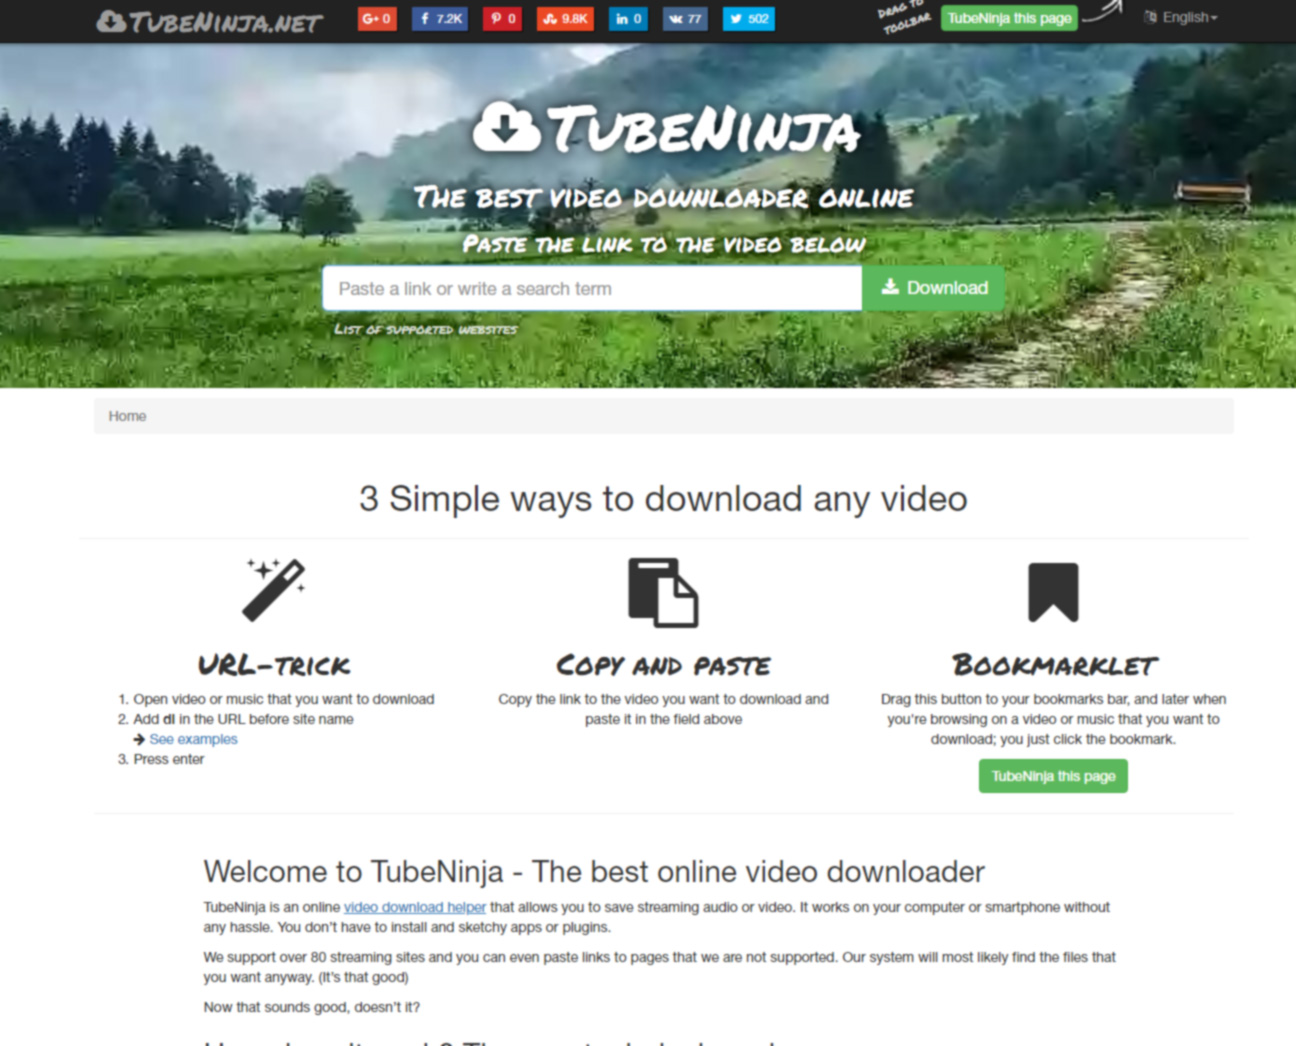 tubeninja-review-tutorial-step-1-front-page.jpg (1296×1046)